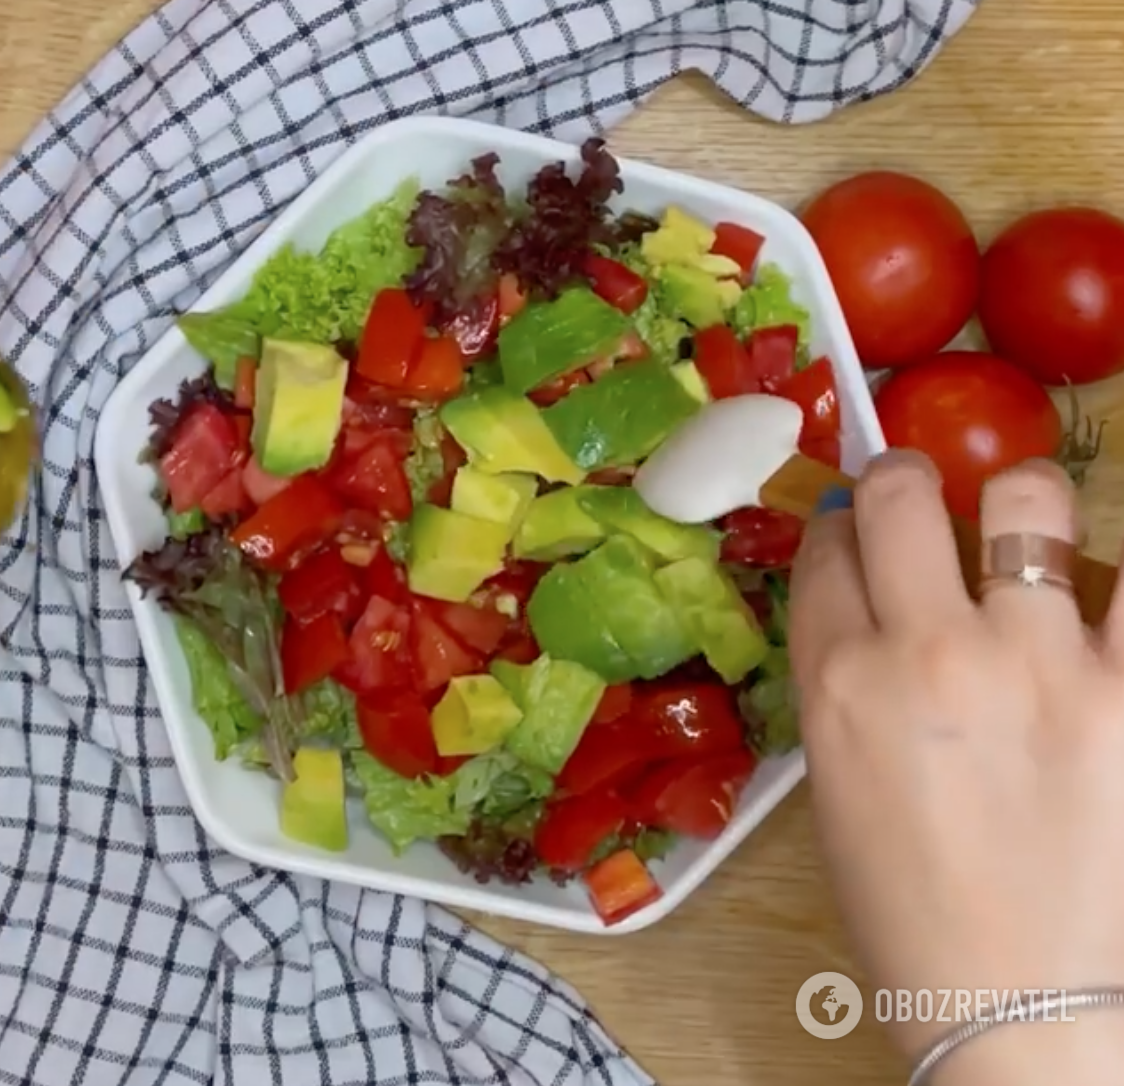 Ready-made healthy salad